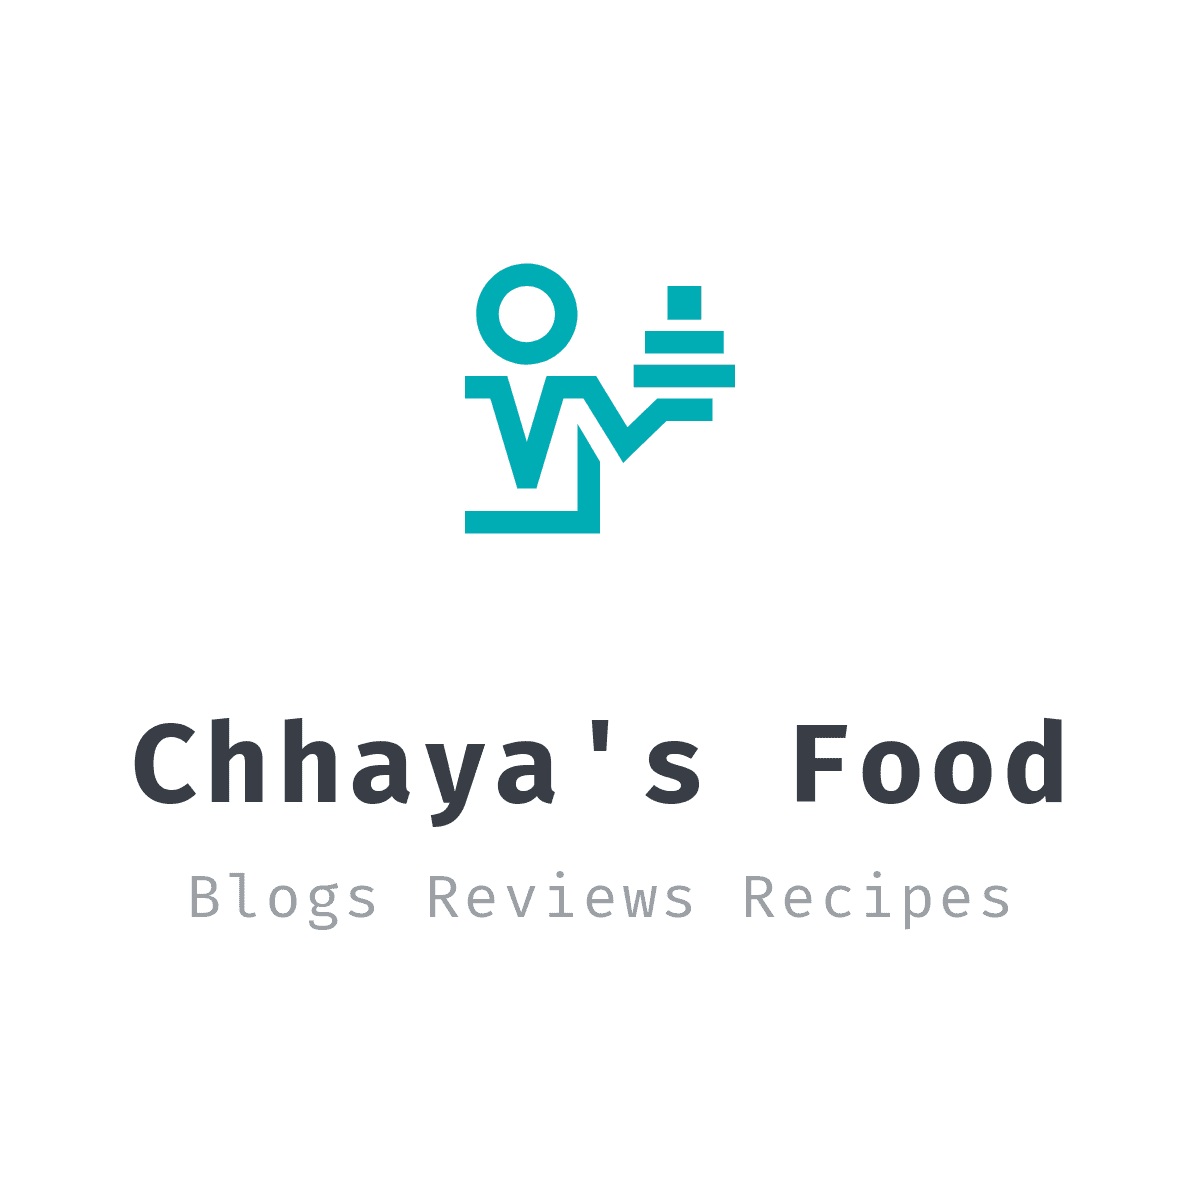 Chhaya's Food